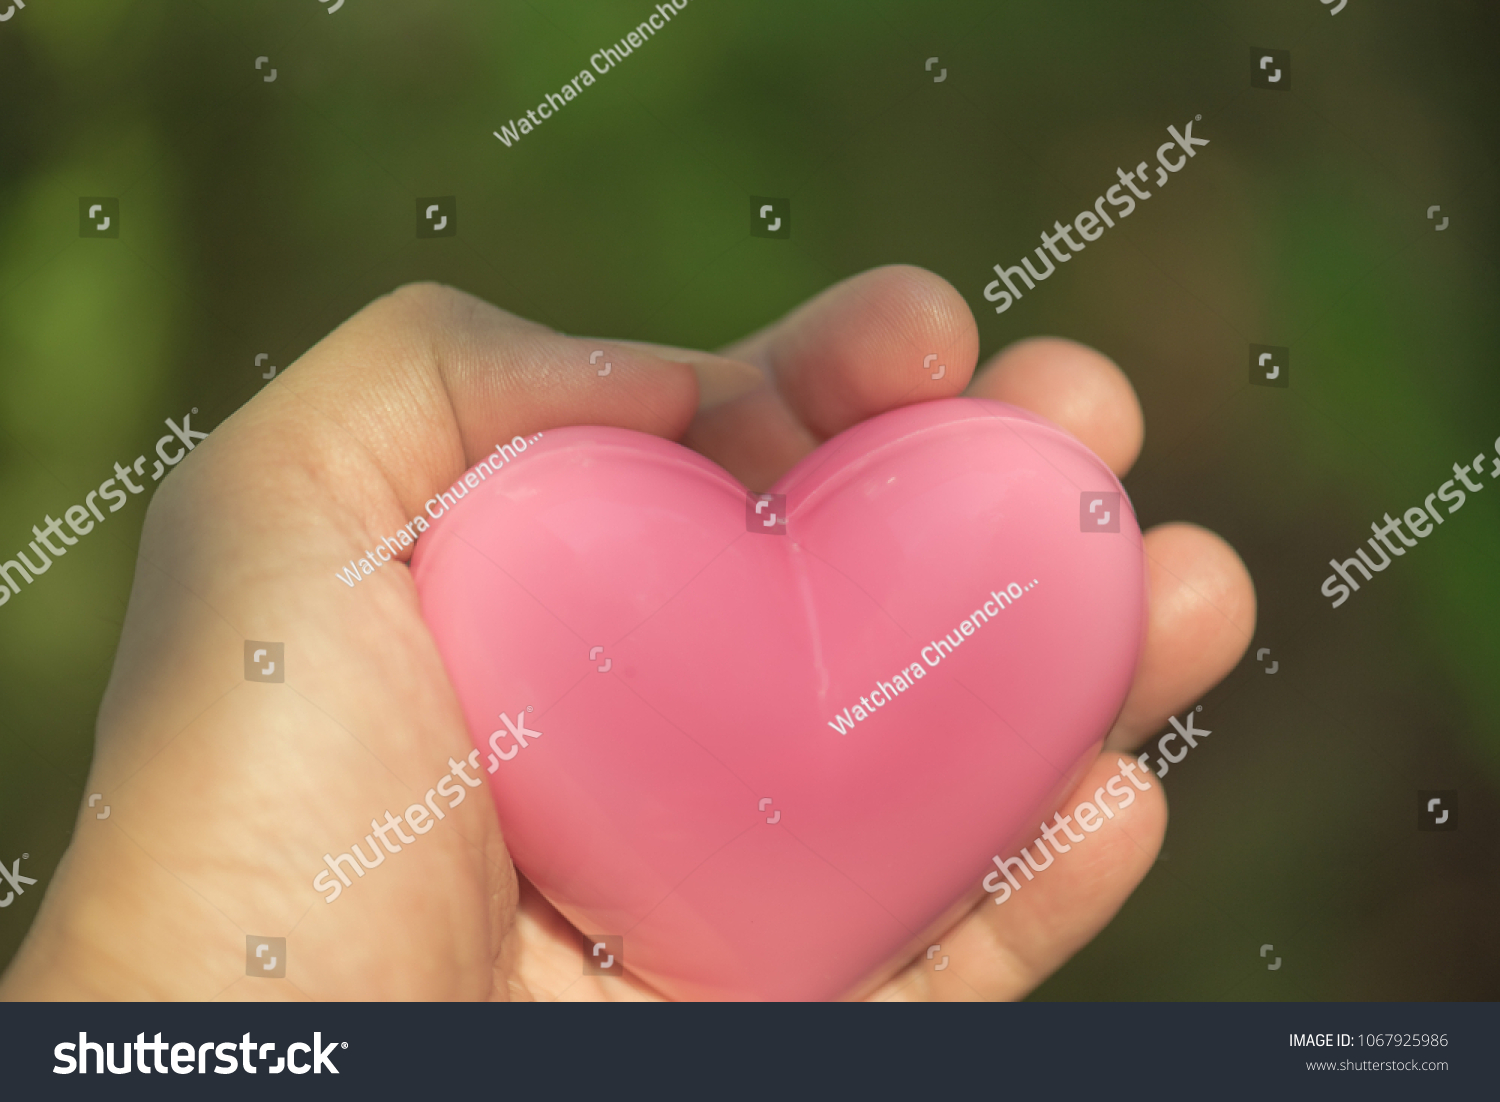 Pink heart shape in hand. #1067925986